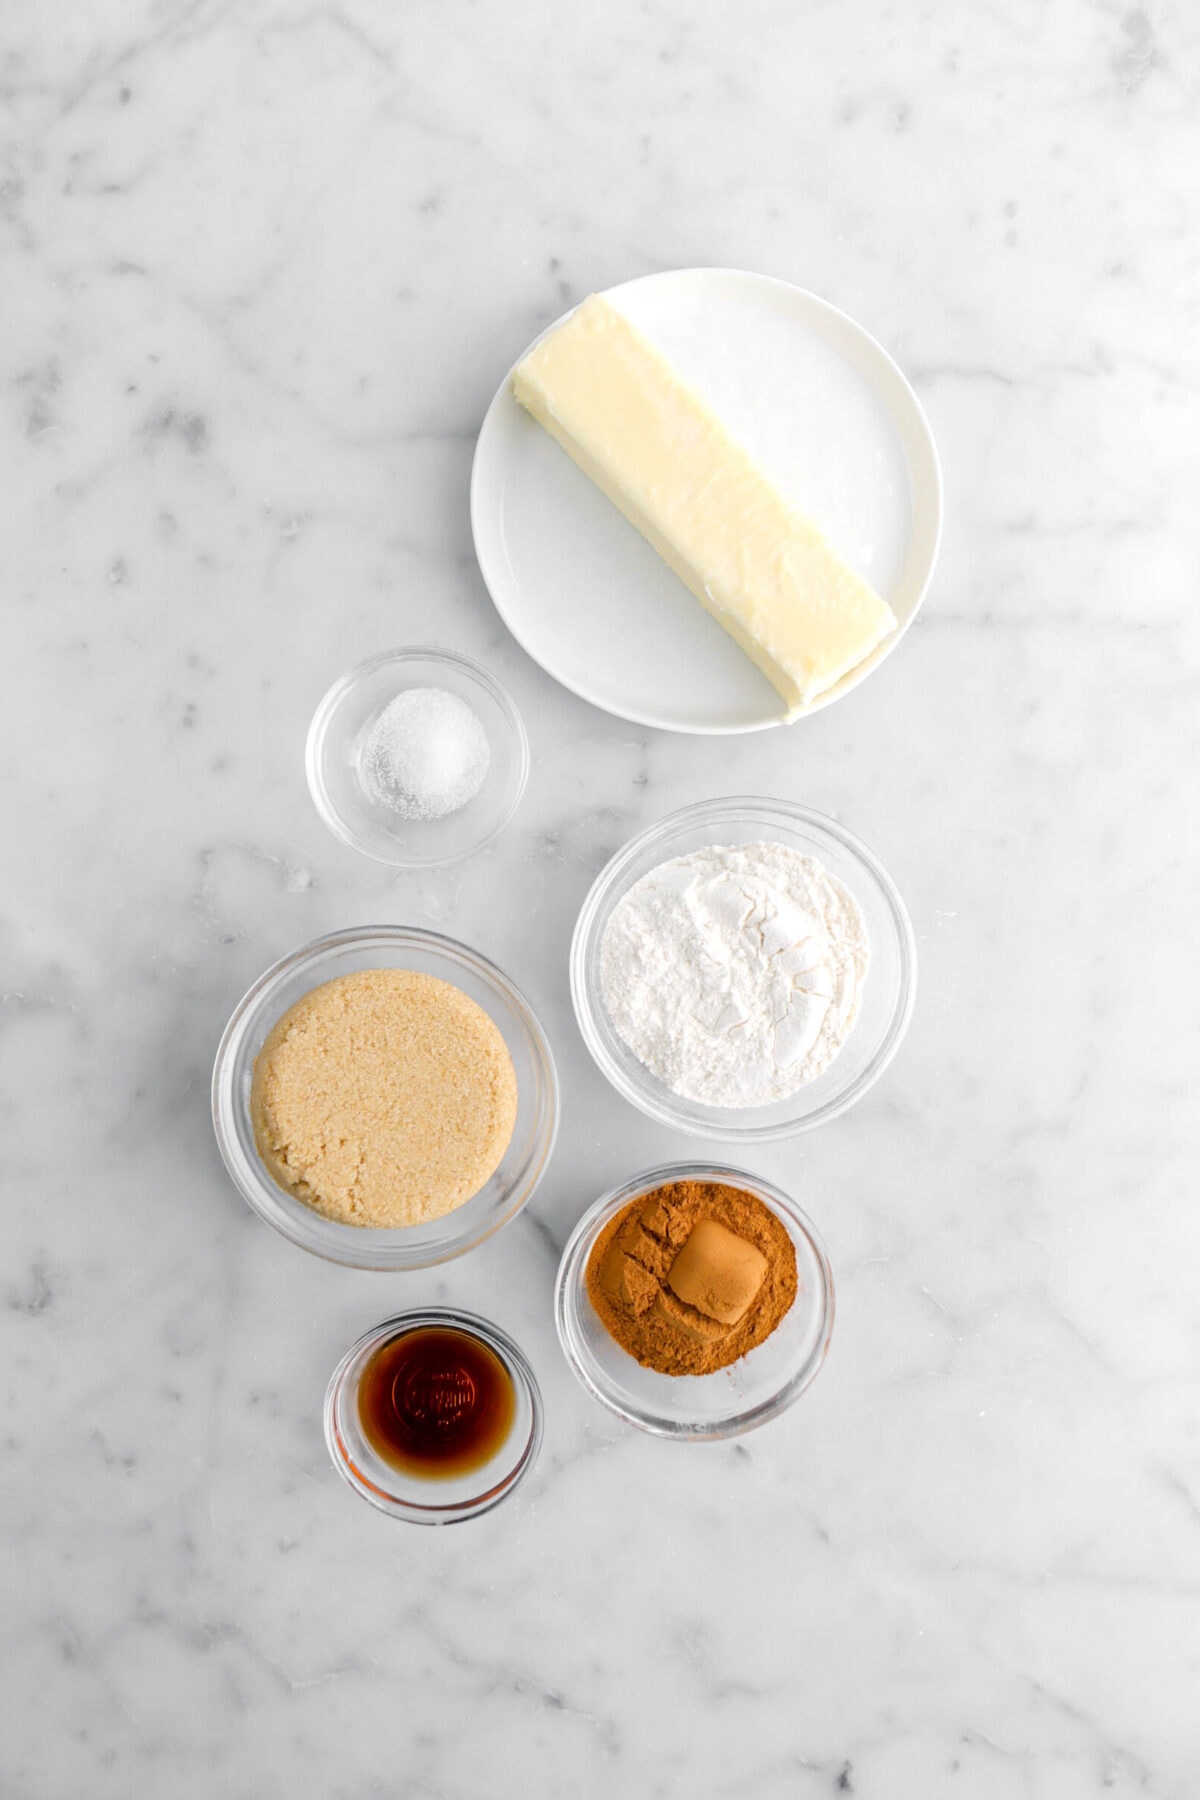 butter, salt, flour, brown sugar, cinnamon, and vanilla on marble surface.